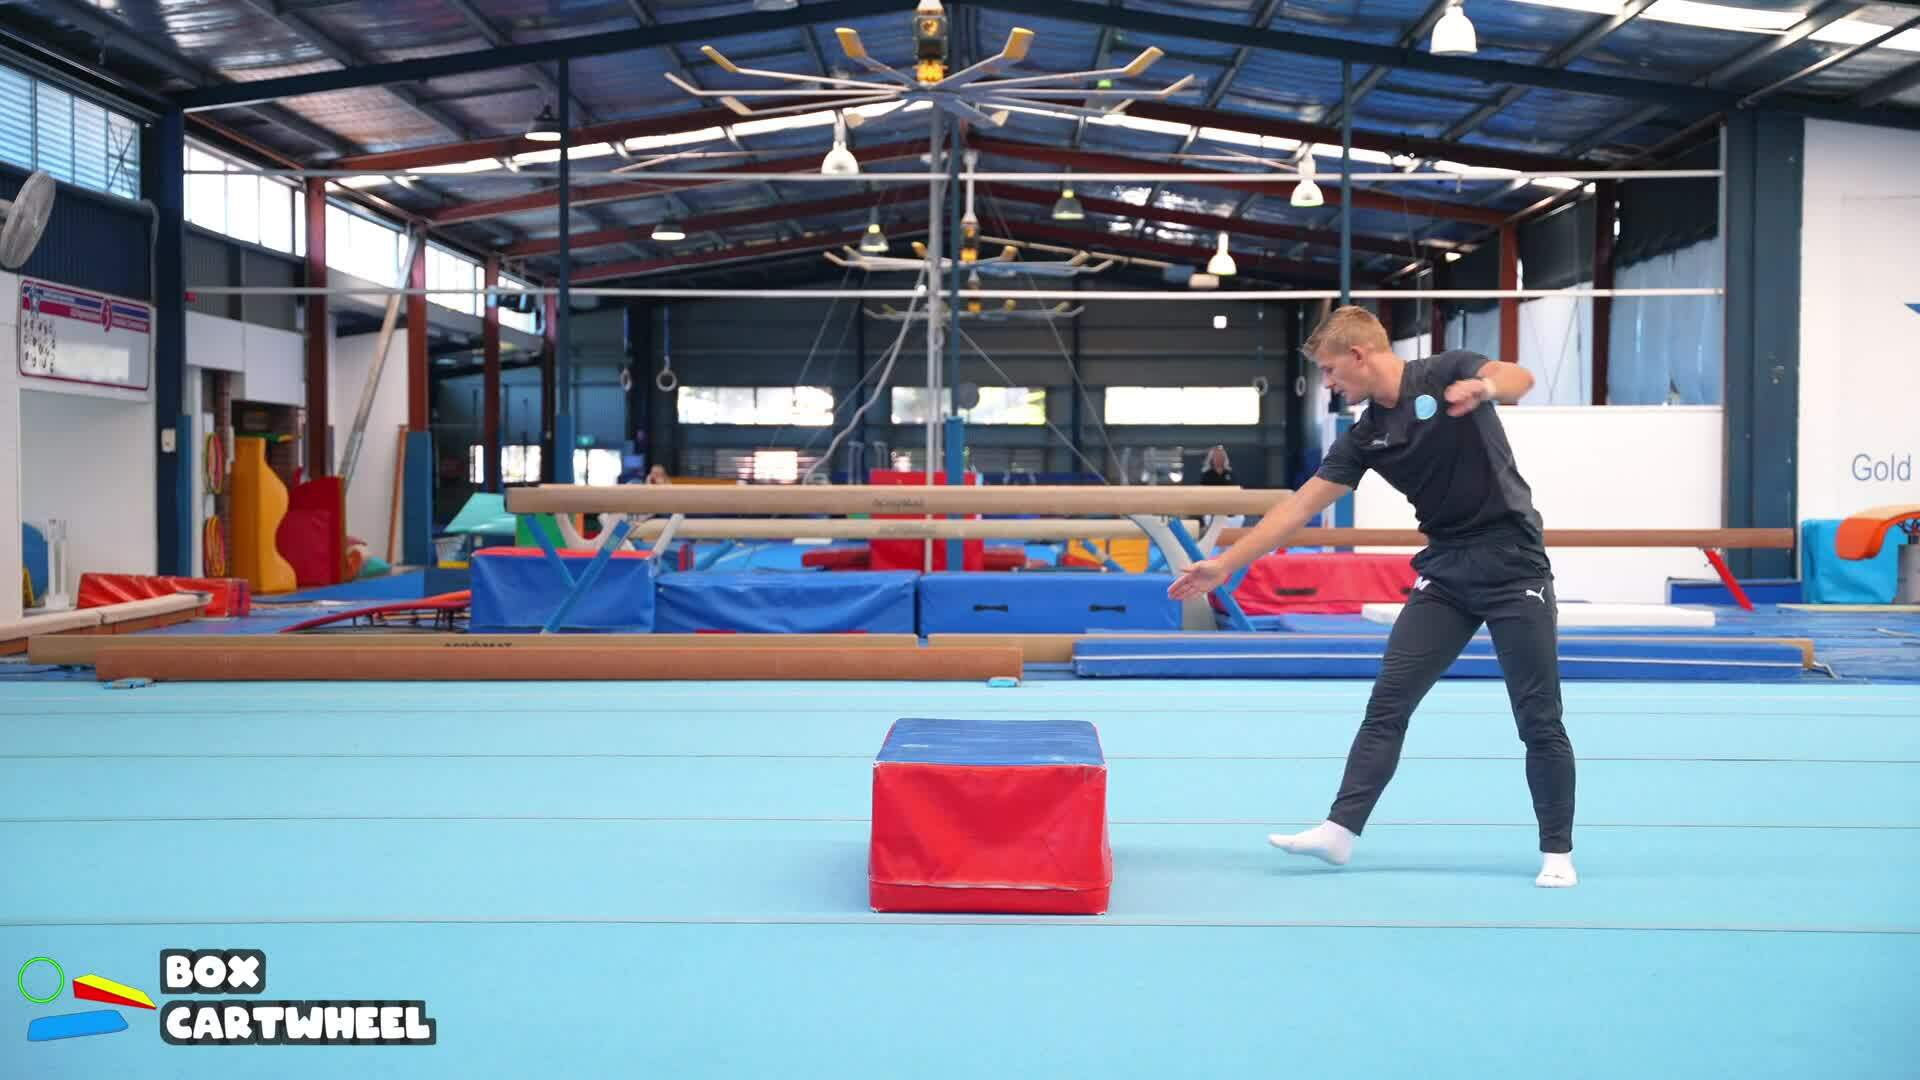 Elementary gymnastics - Floor mats - 9 box cartwheel